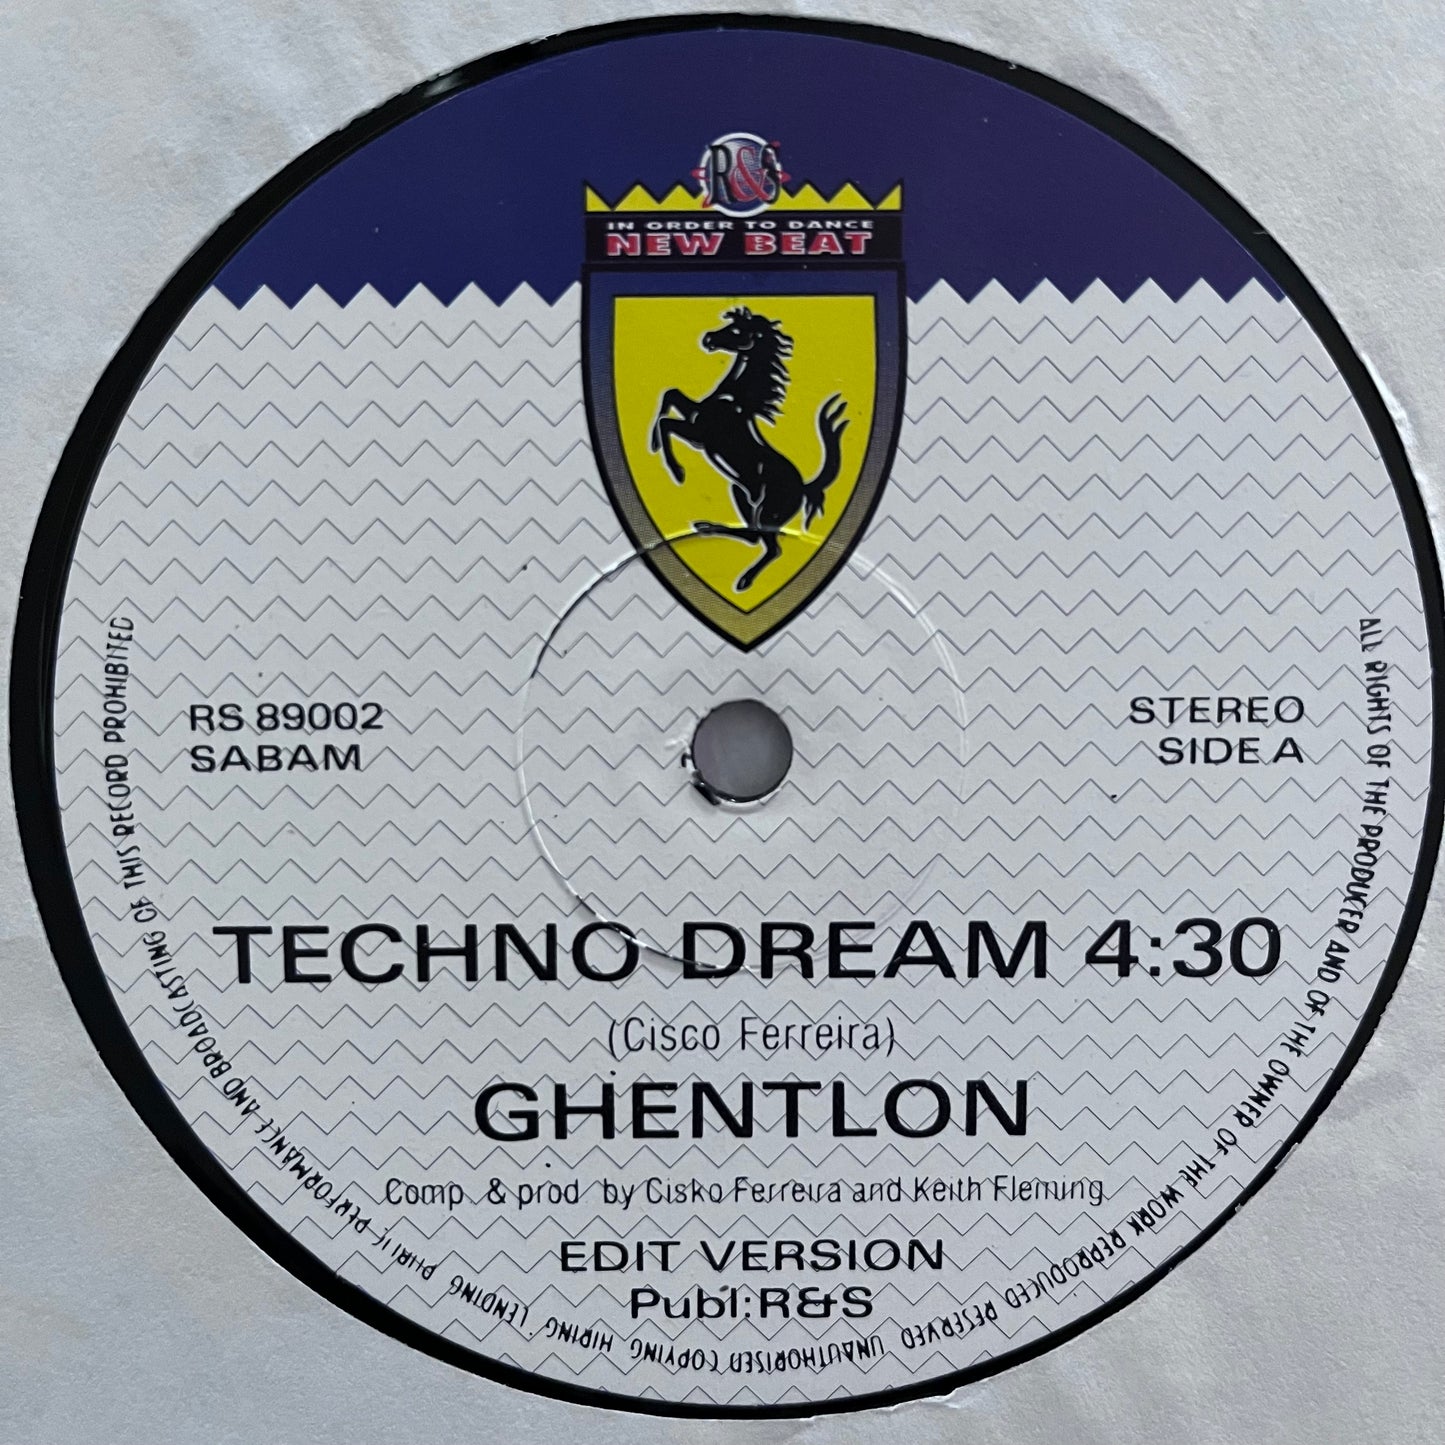 Ghentlon “Technodream” 2 Version 12inch Vinyl Record on R&S Records